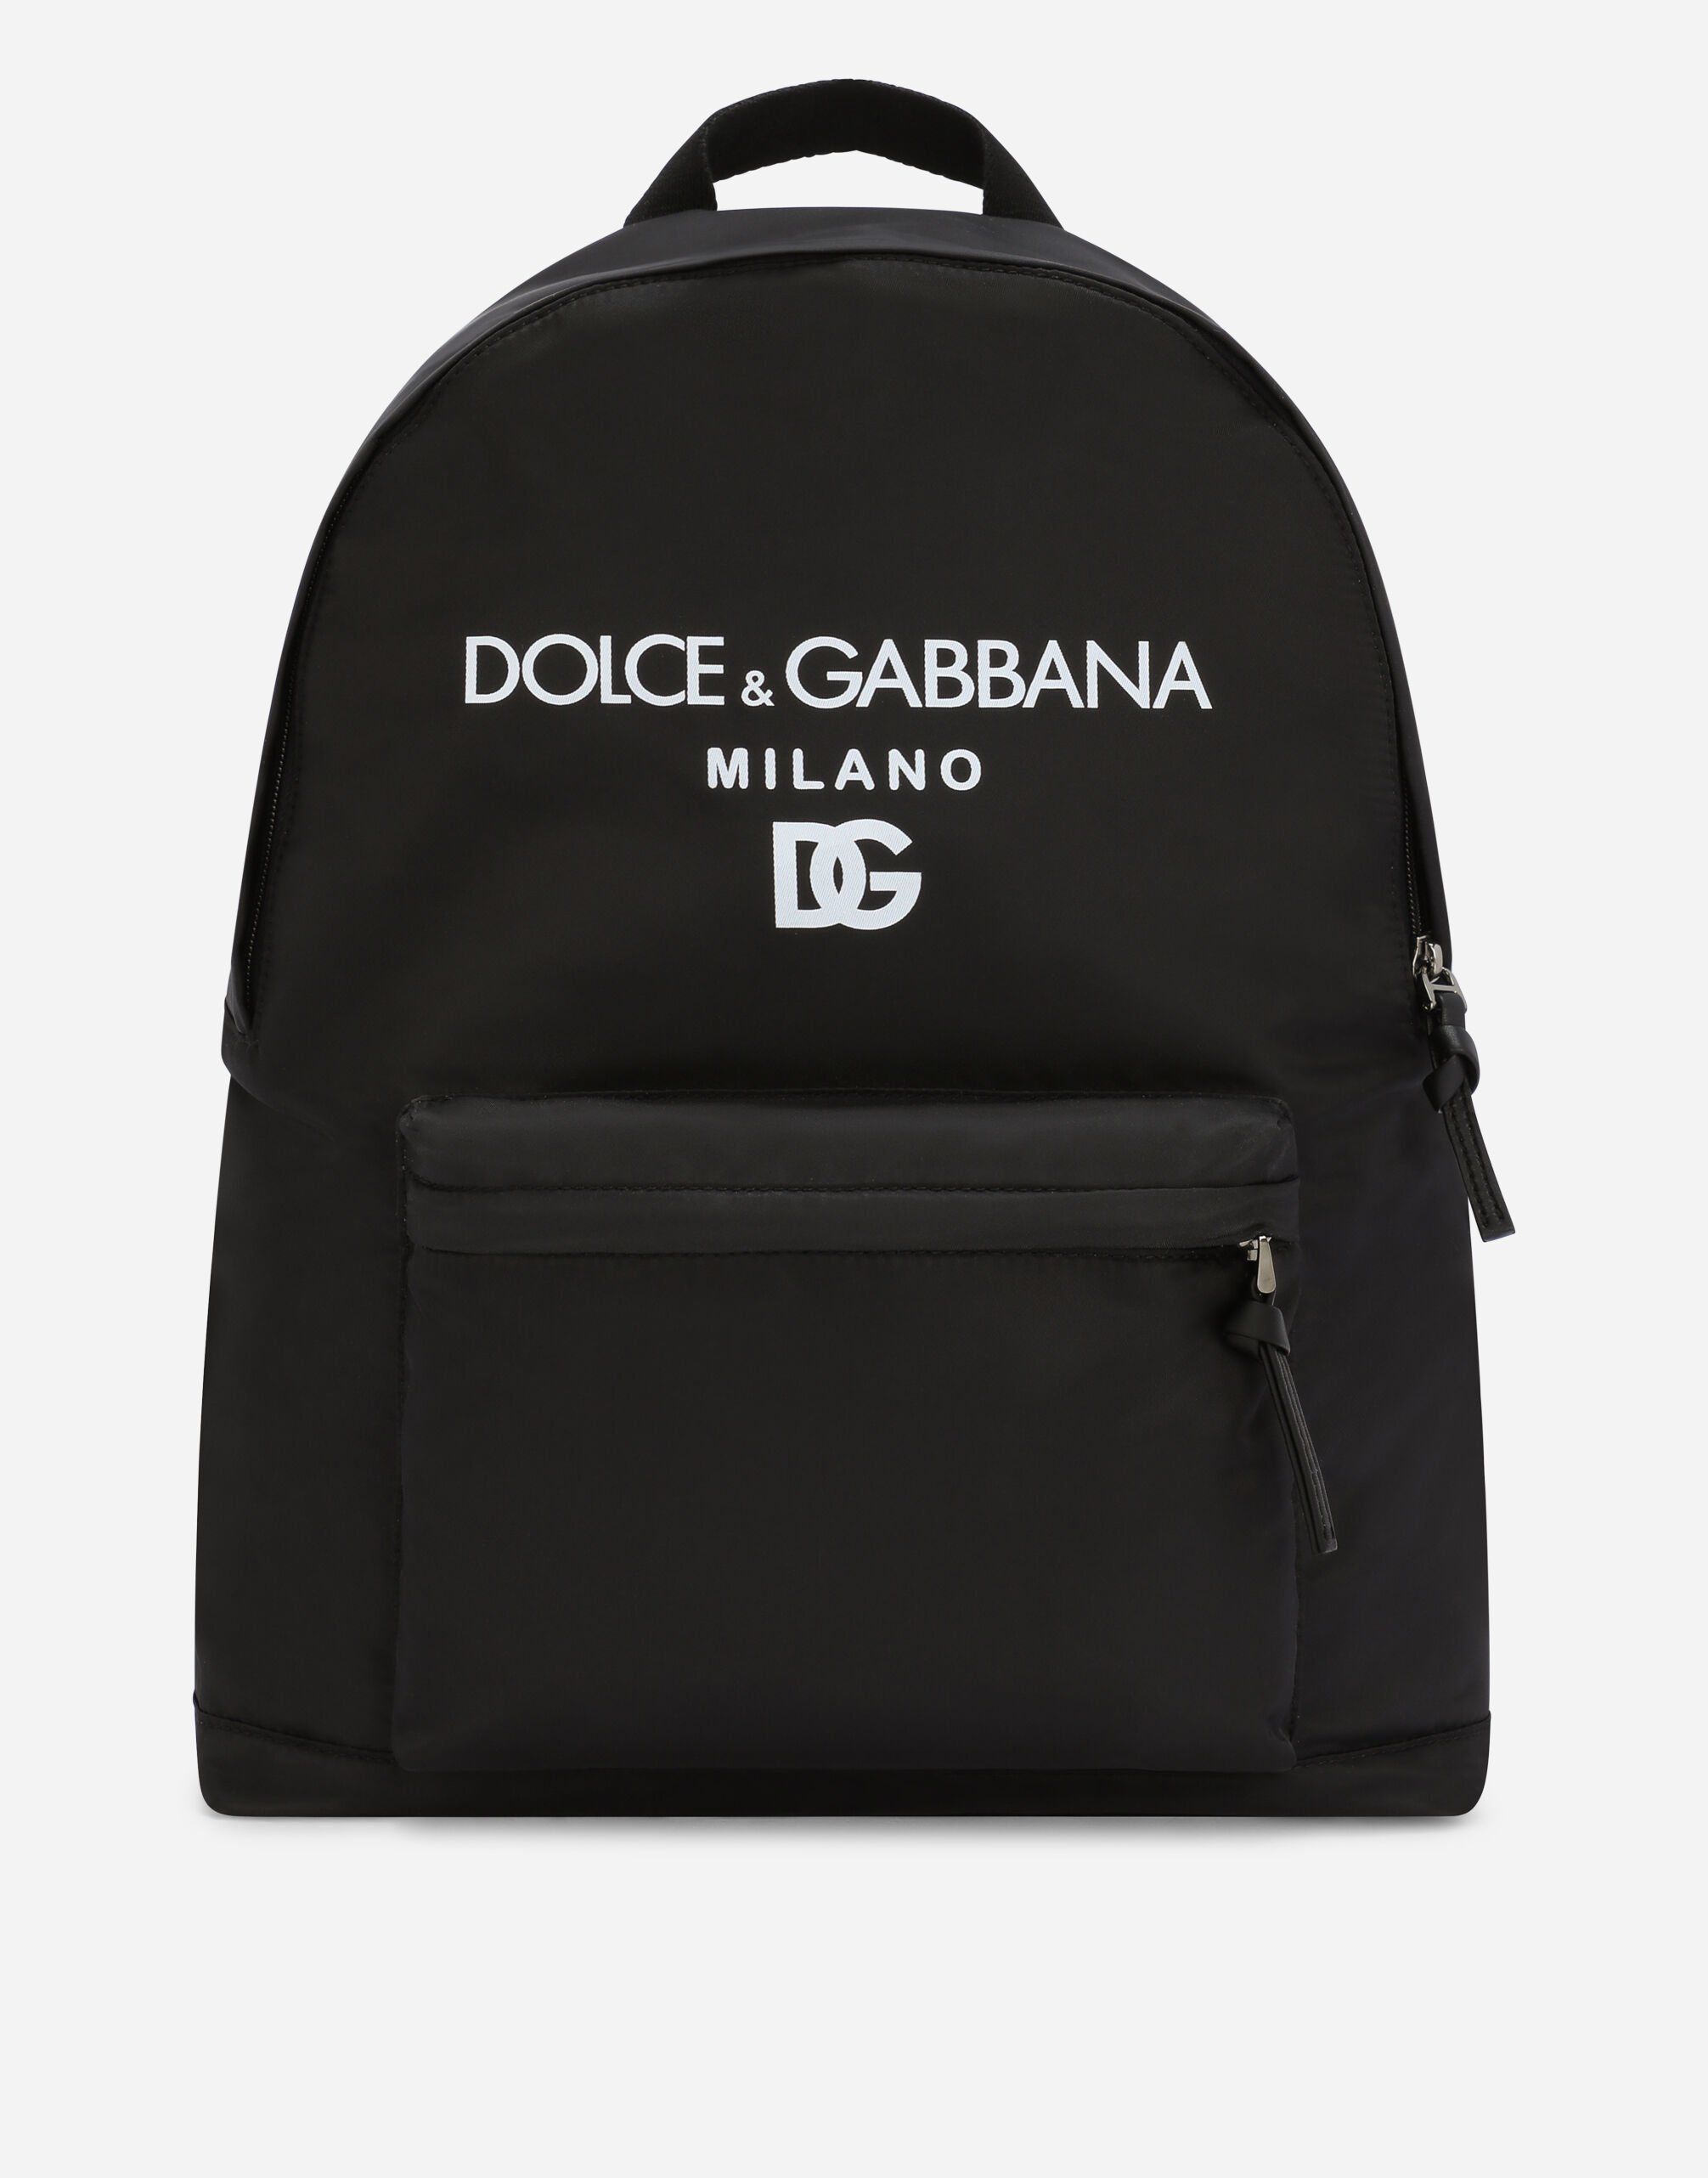 DolceGabbanaSpa Nylon backpack with Dolce&Gabbana Milano print Multicolor L4JWFNHS7MN